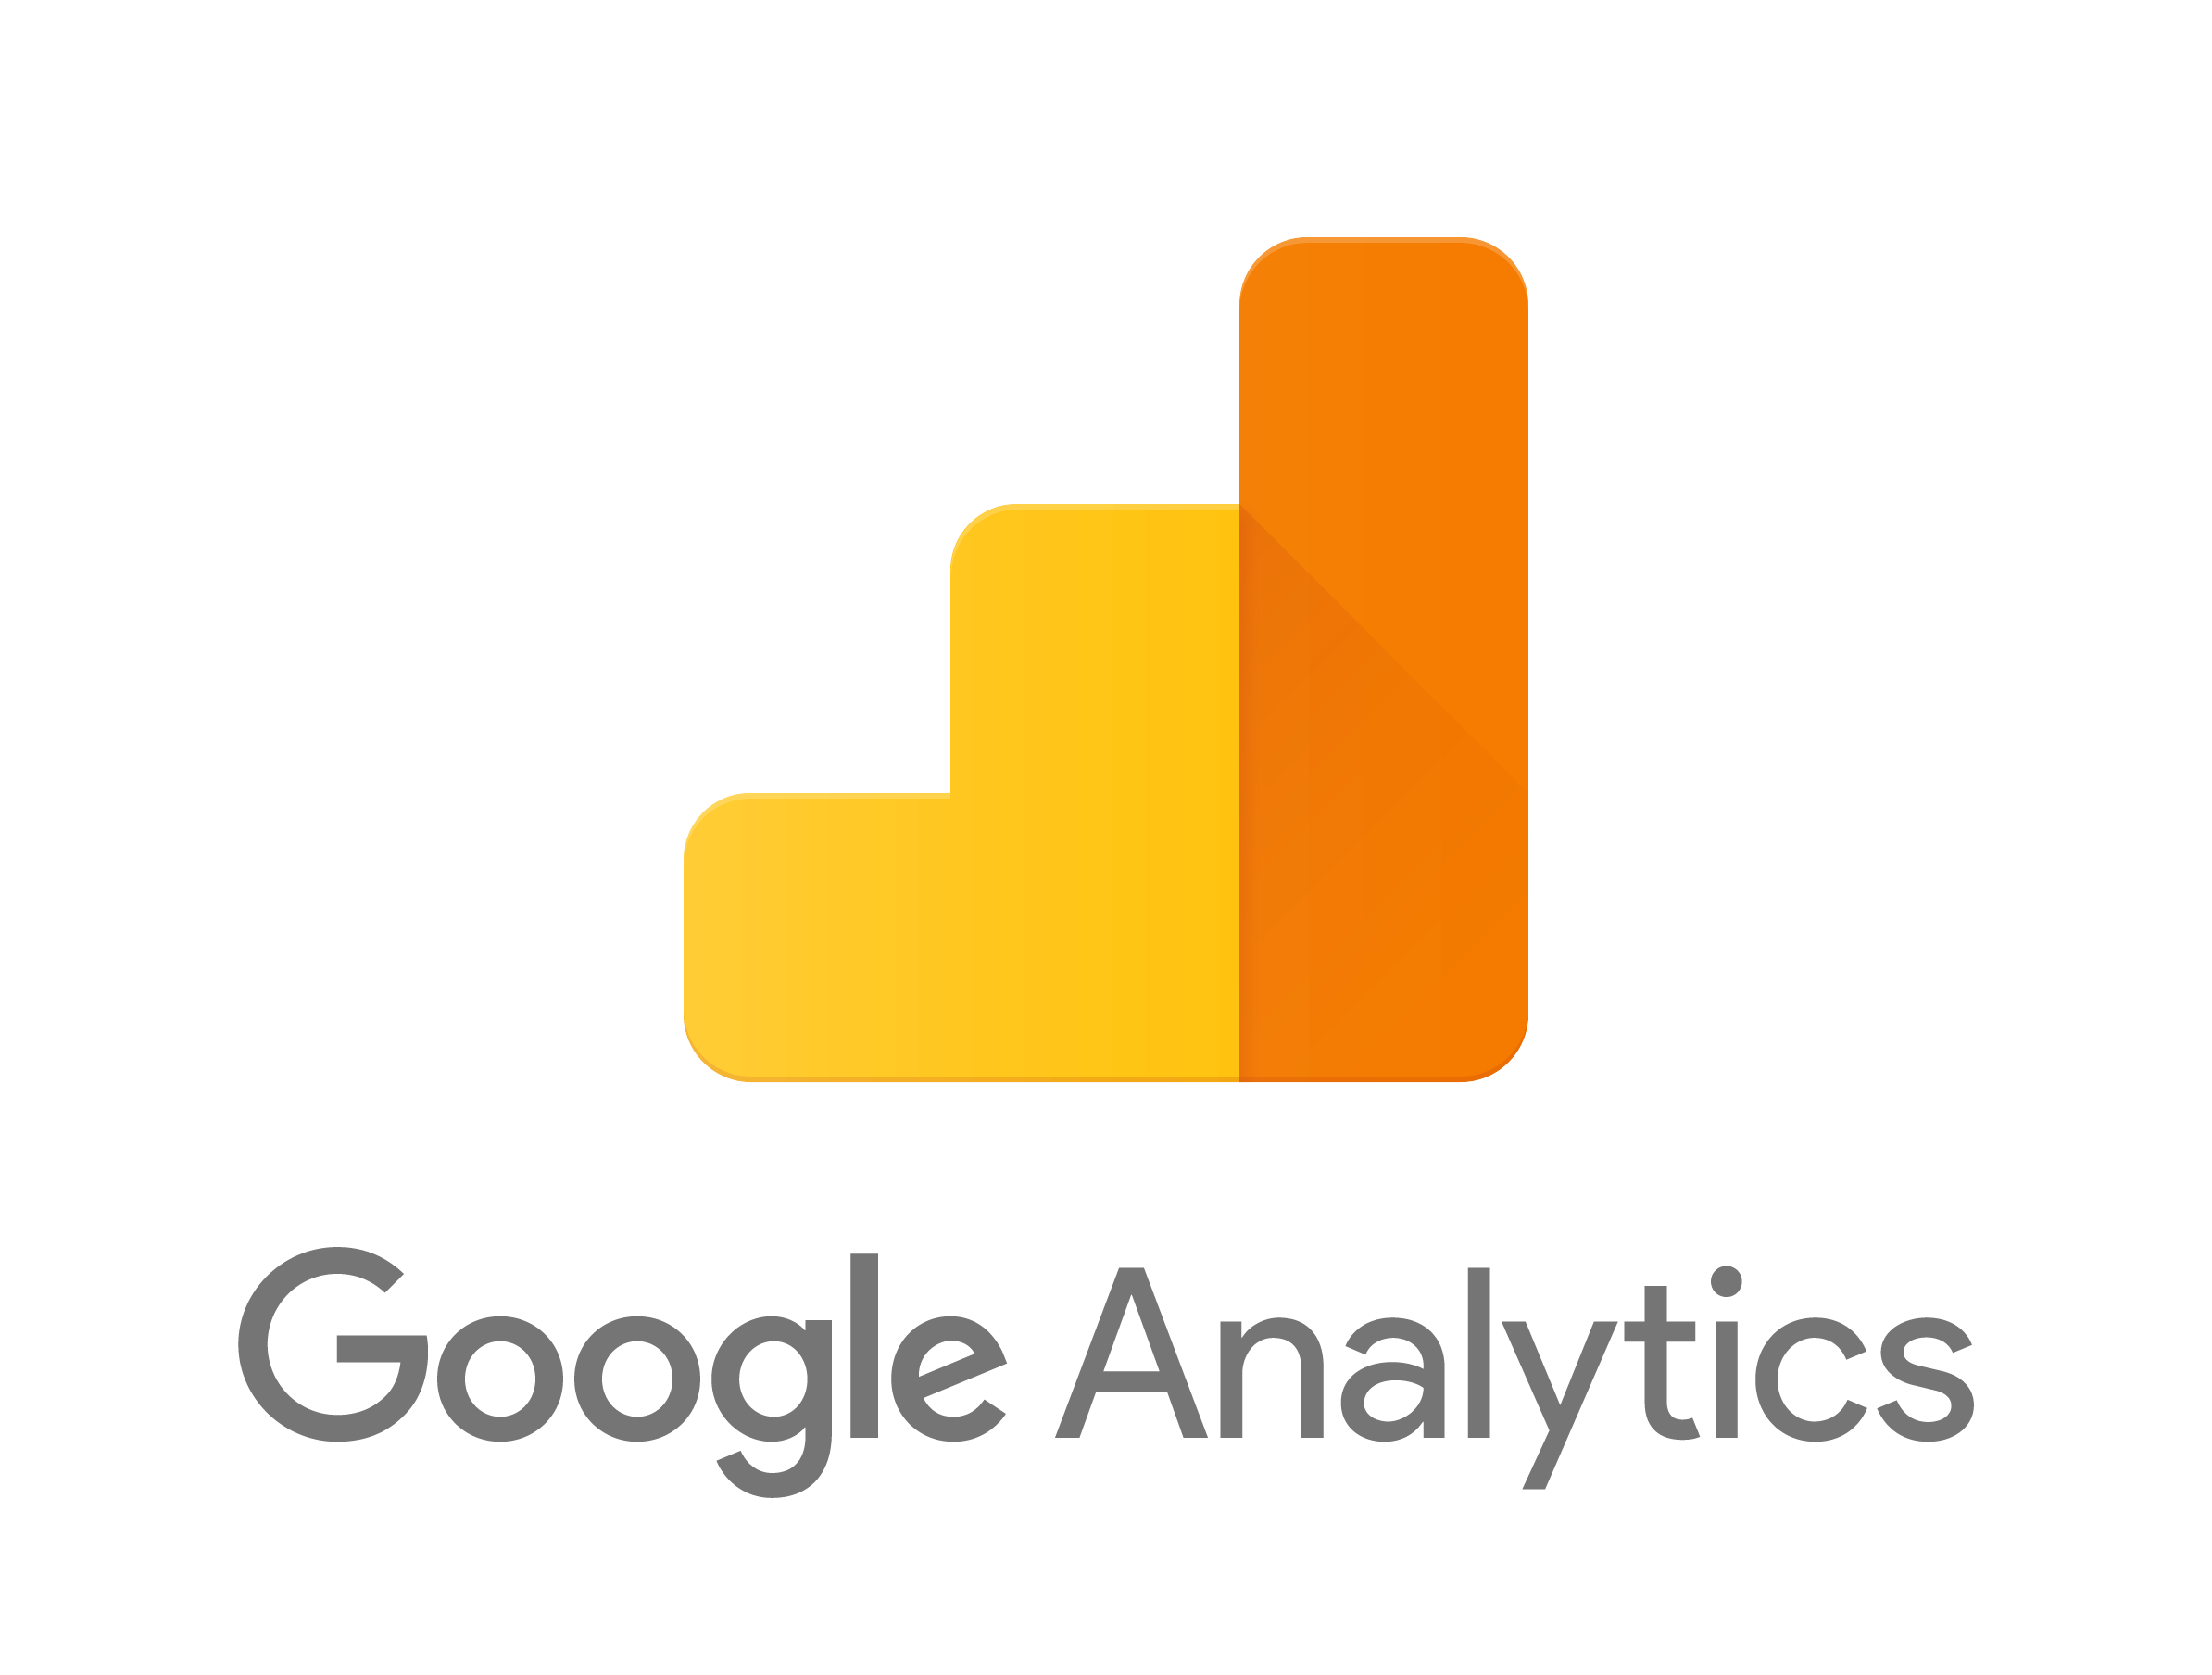 Updated Google Logo - Google Analytics Developer Branding Guidelines & Policies | Google ...